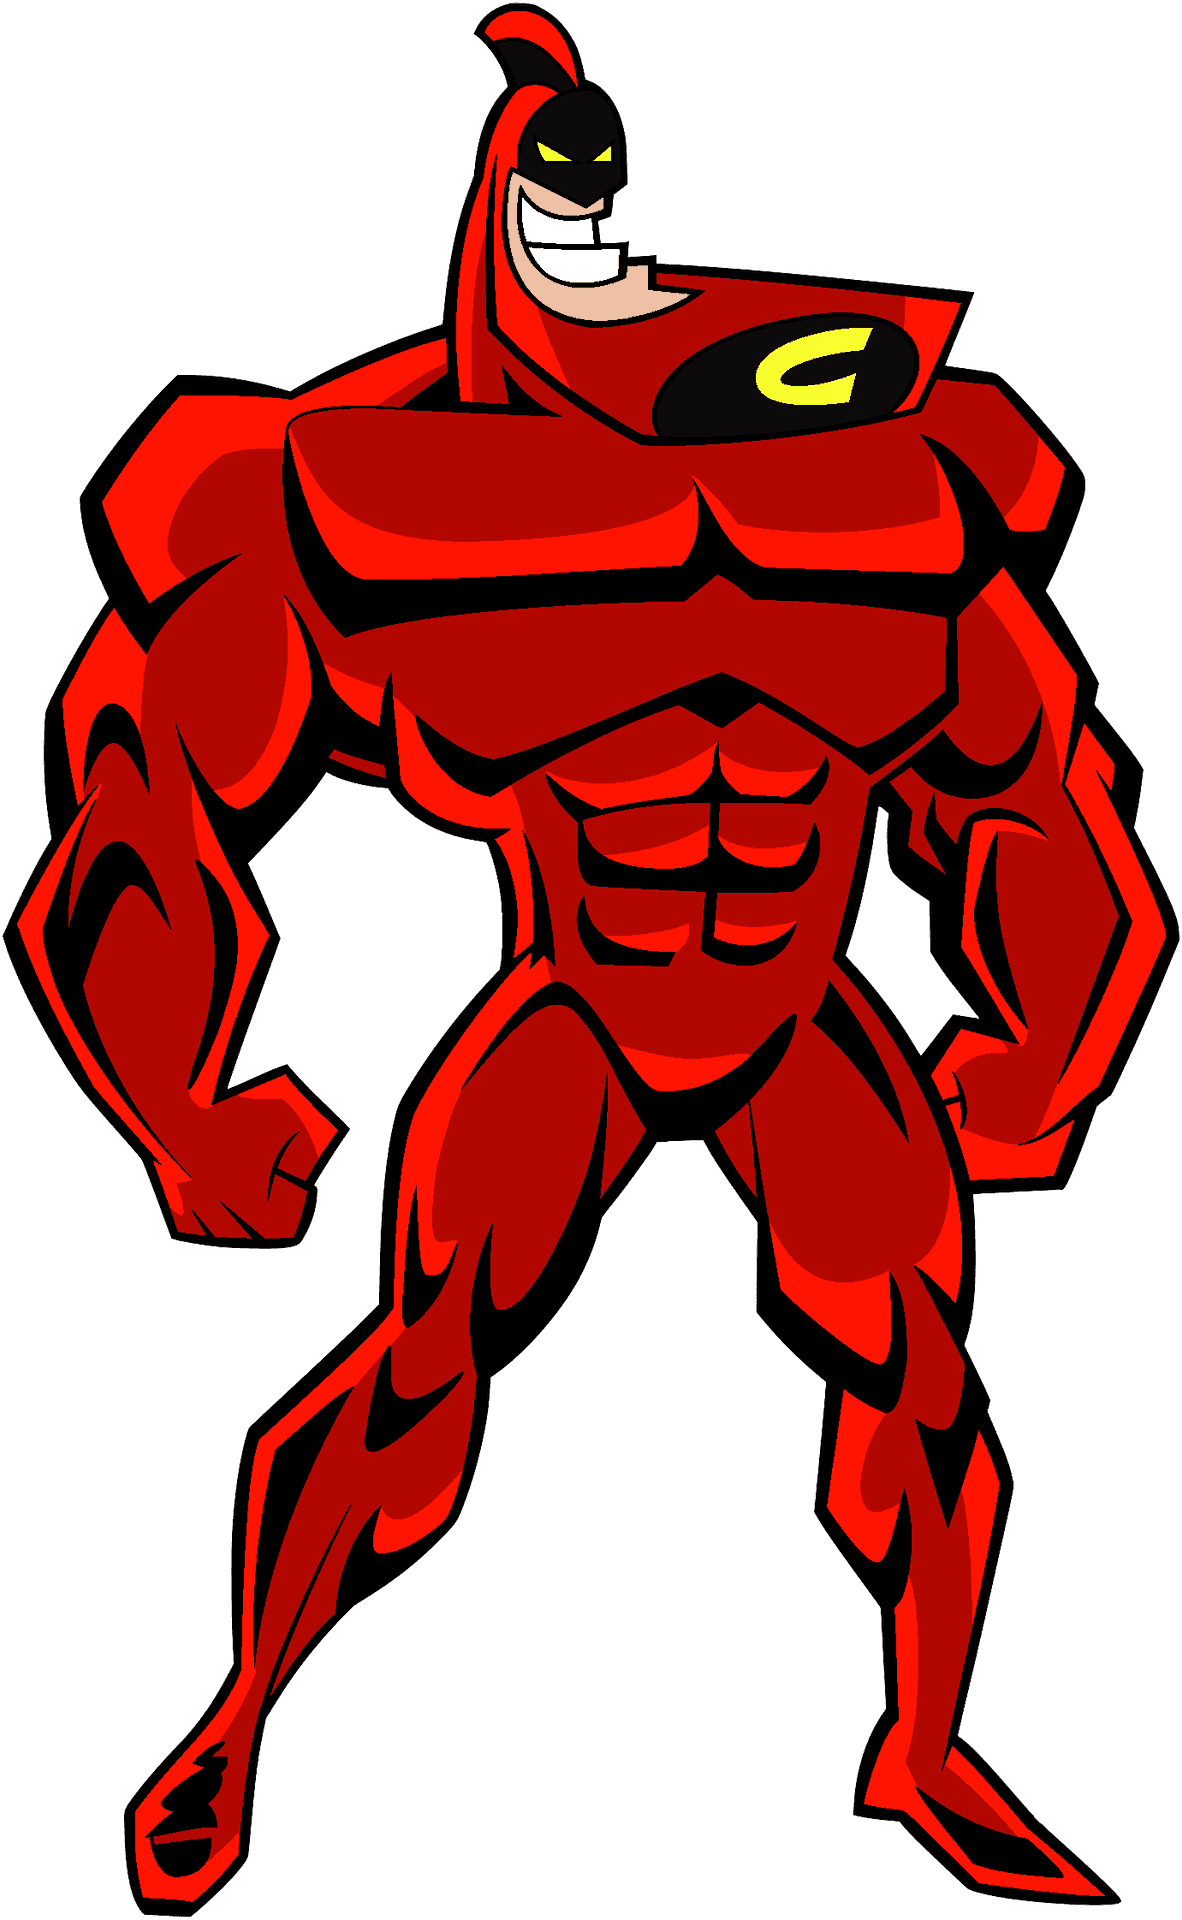 Animated Superhero Character PNG image